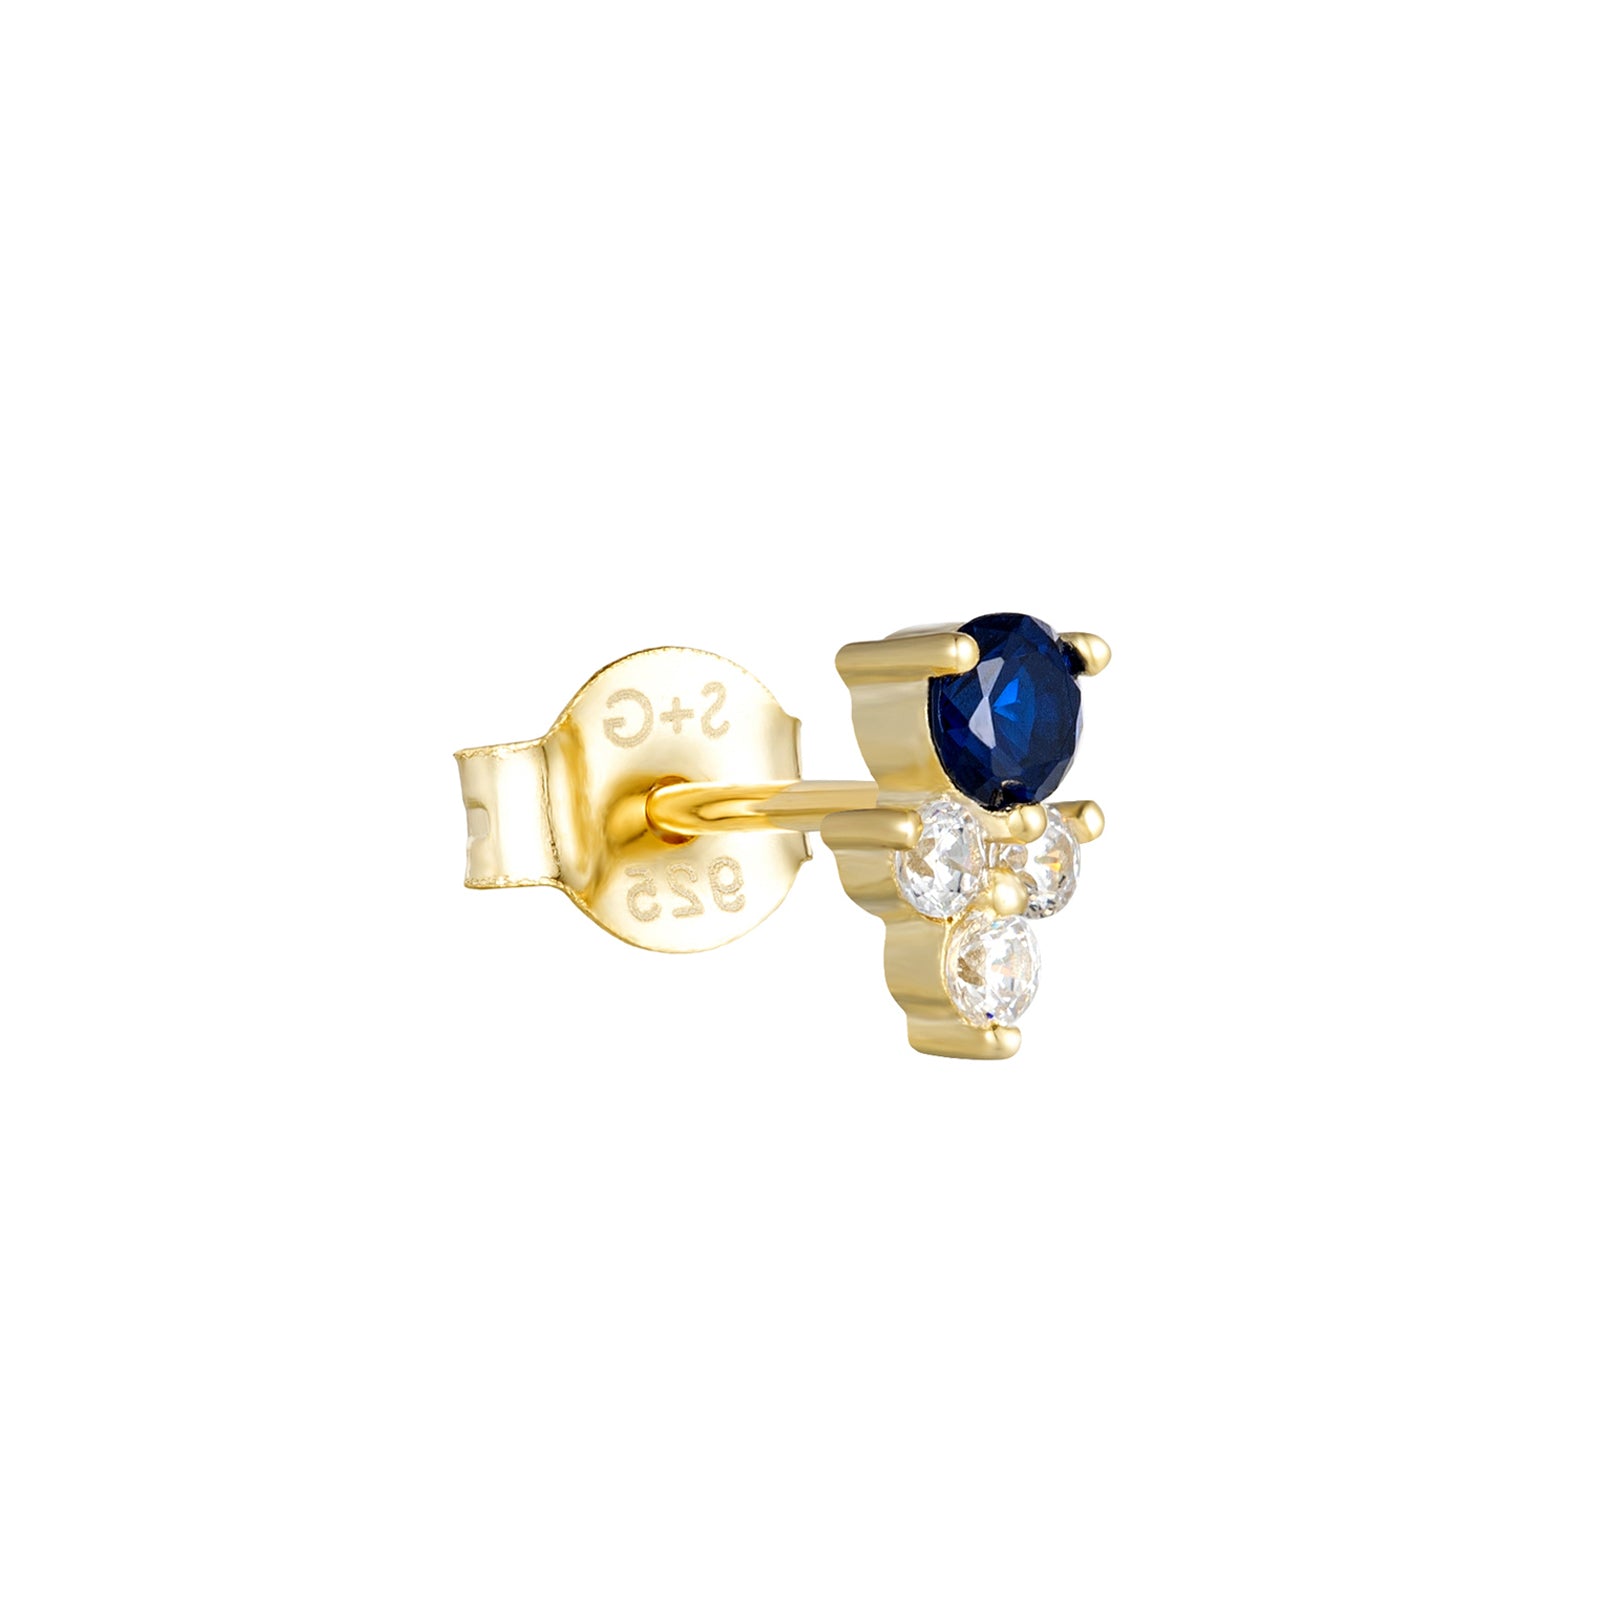 18ct Gold Vermeil Sapphire CZ Stud Earrings